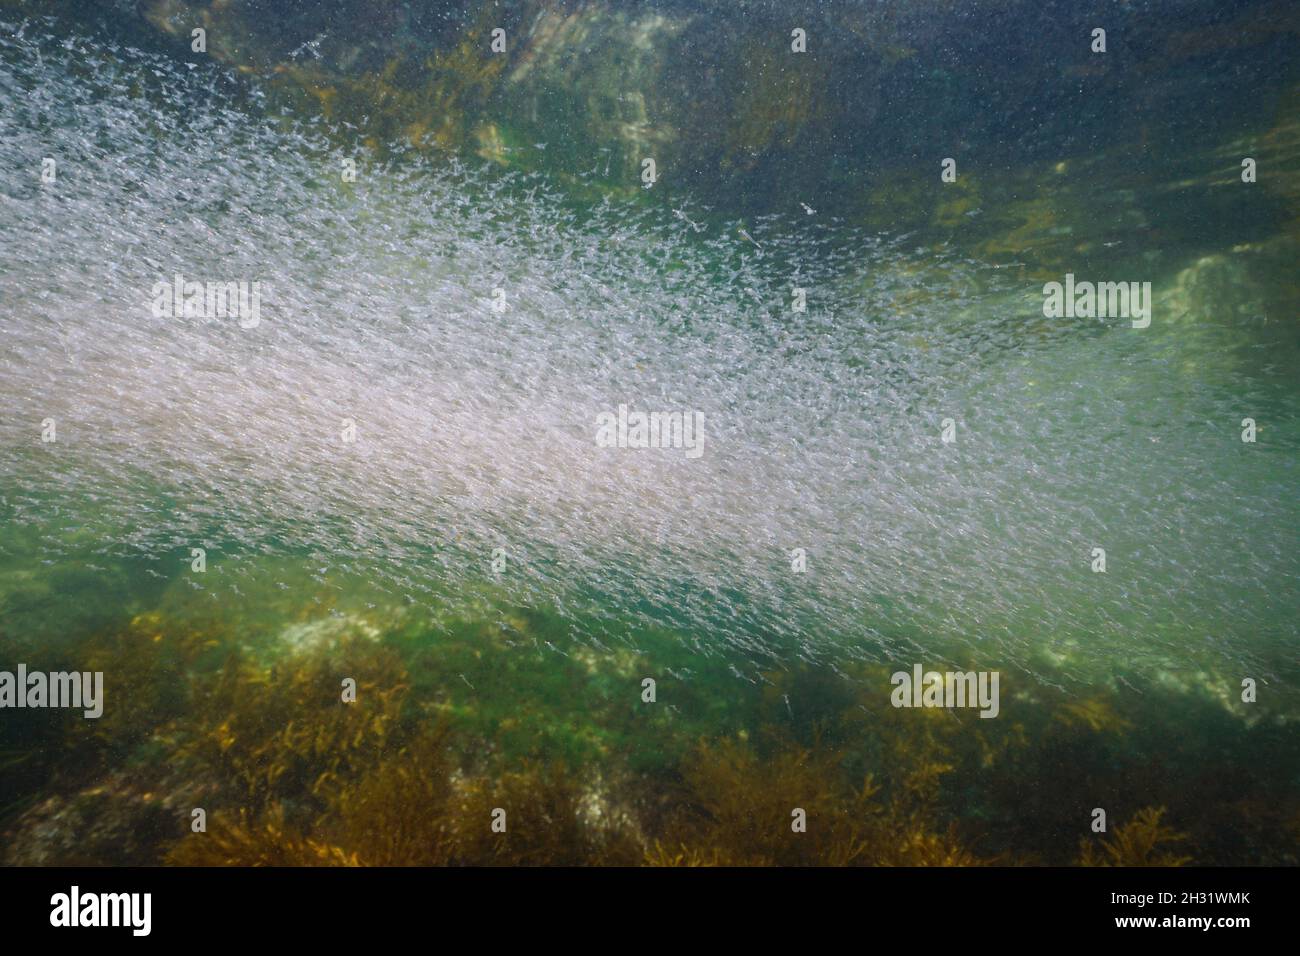 Krill swarm underwater in the ocean, Eastern Atlantic, Spain, Galicia Stock Photo